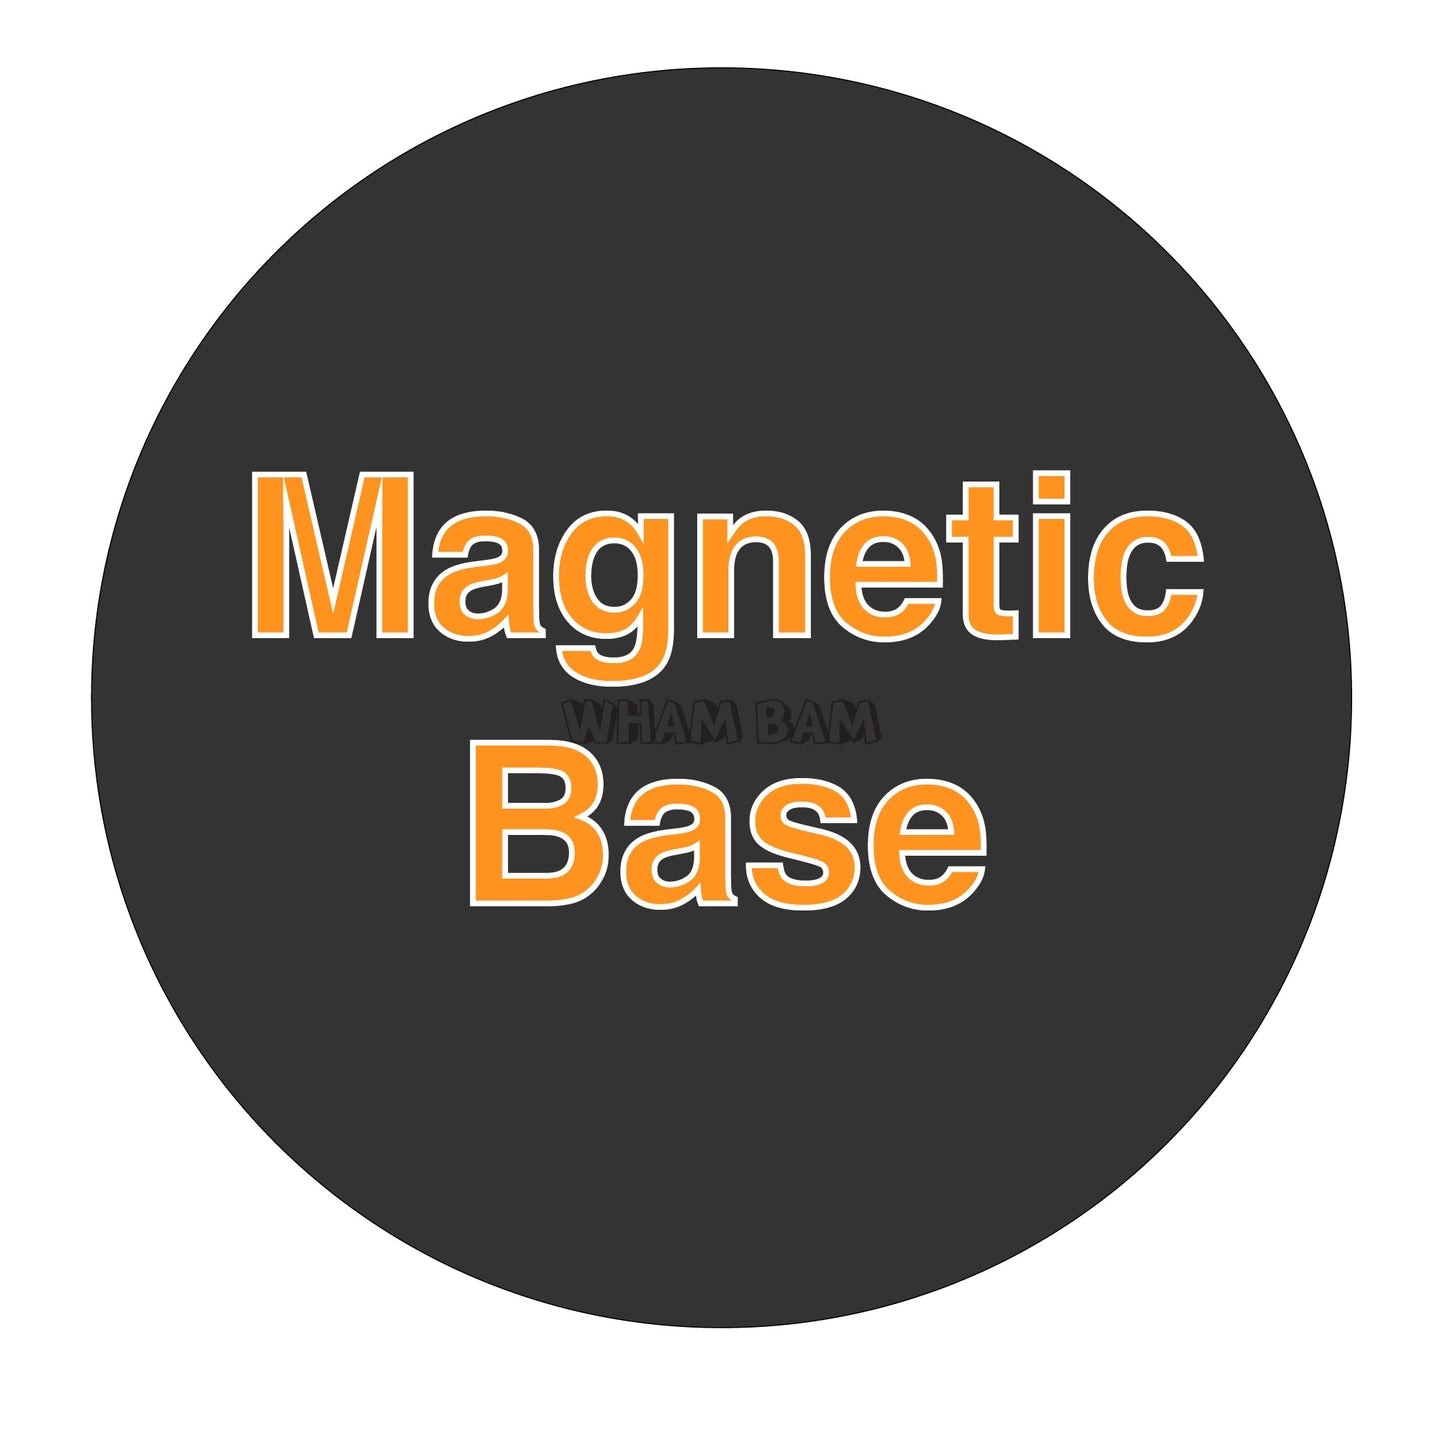 Magnetic Base - Ø310 No Cut Outs - Tractus T850, Flsun V400